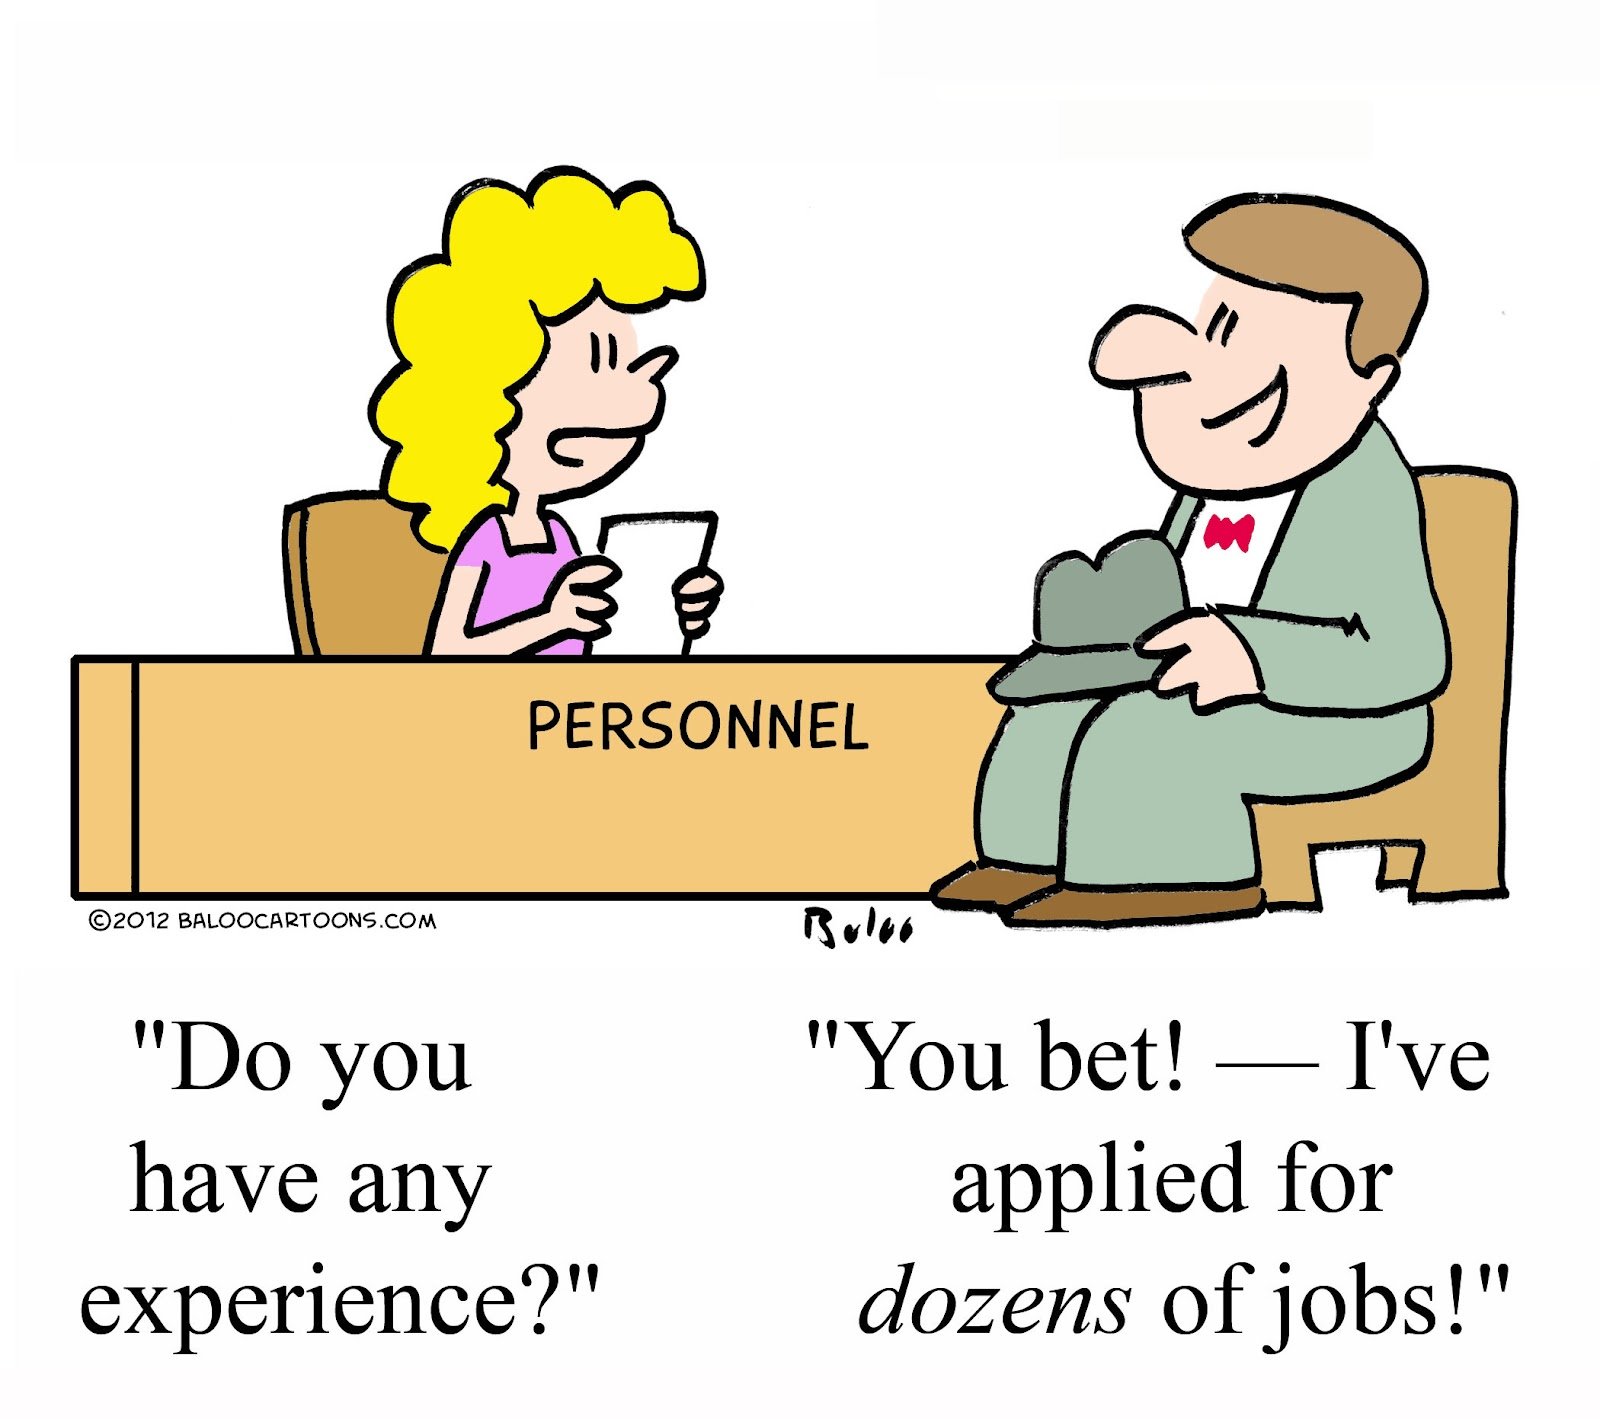 Cartoon - Applied for dozens of jobs